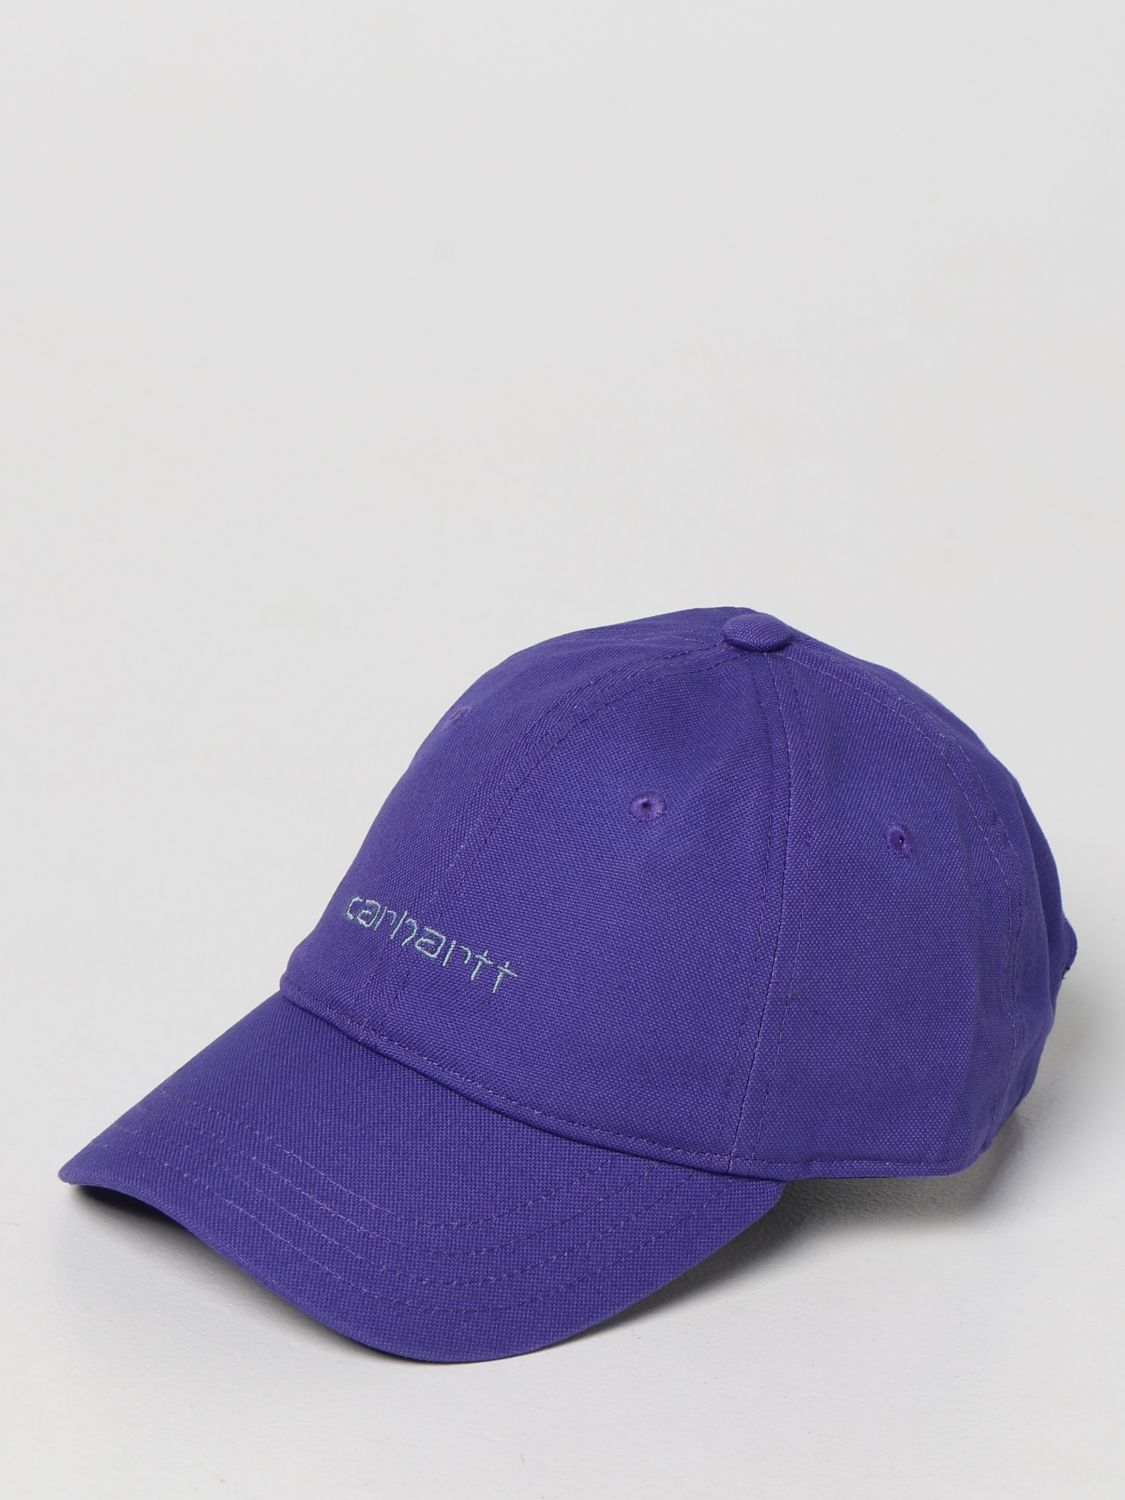 Carhartt Wip Carhartt Wip帽子男士 紫色 Carhartt Wip帽子i0276在线就在giglio Com